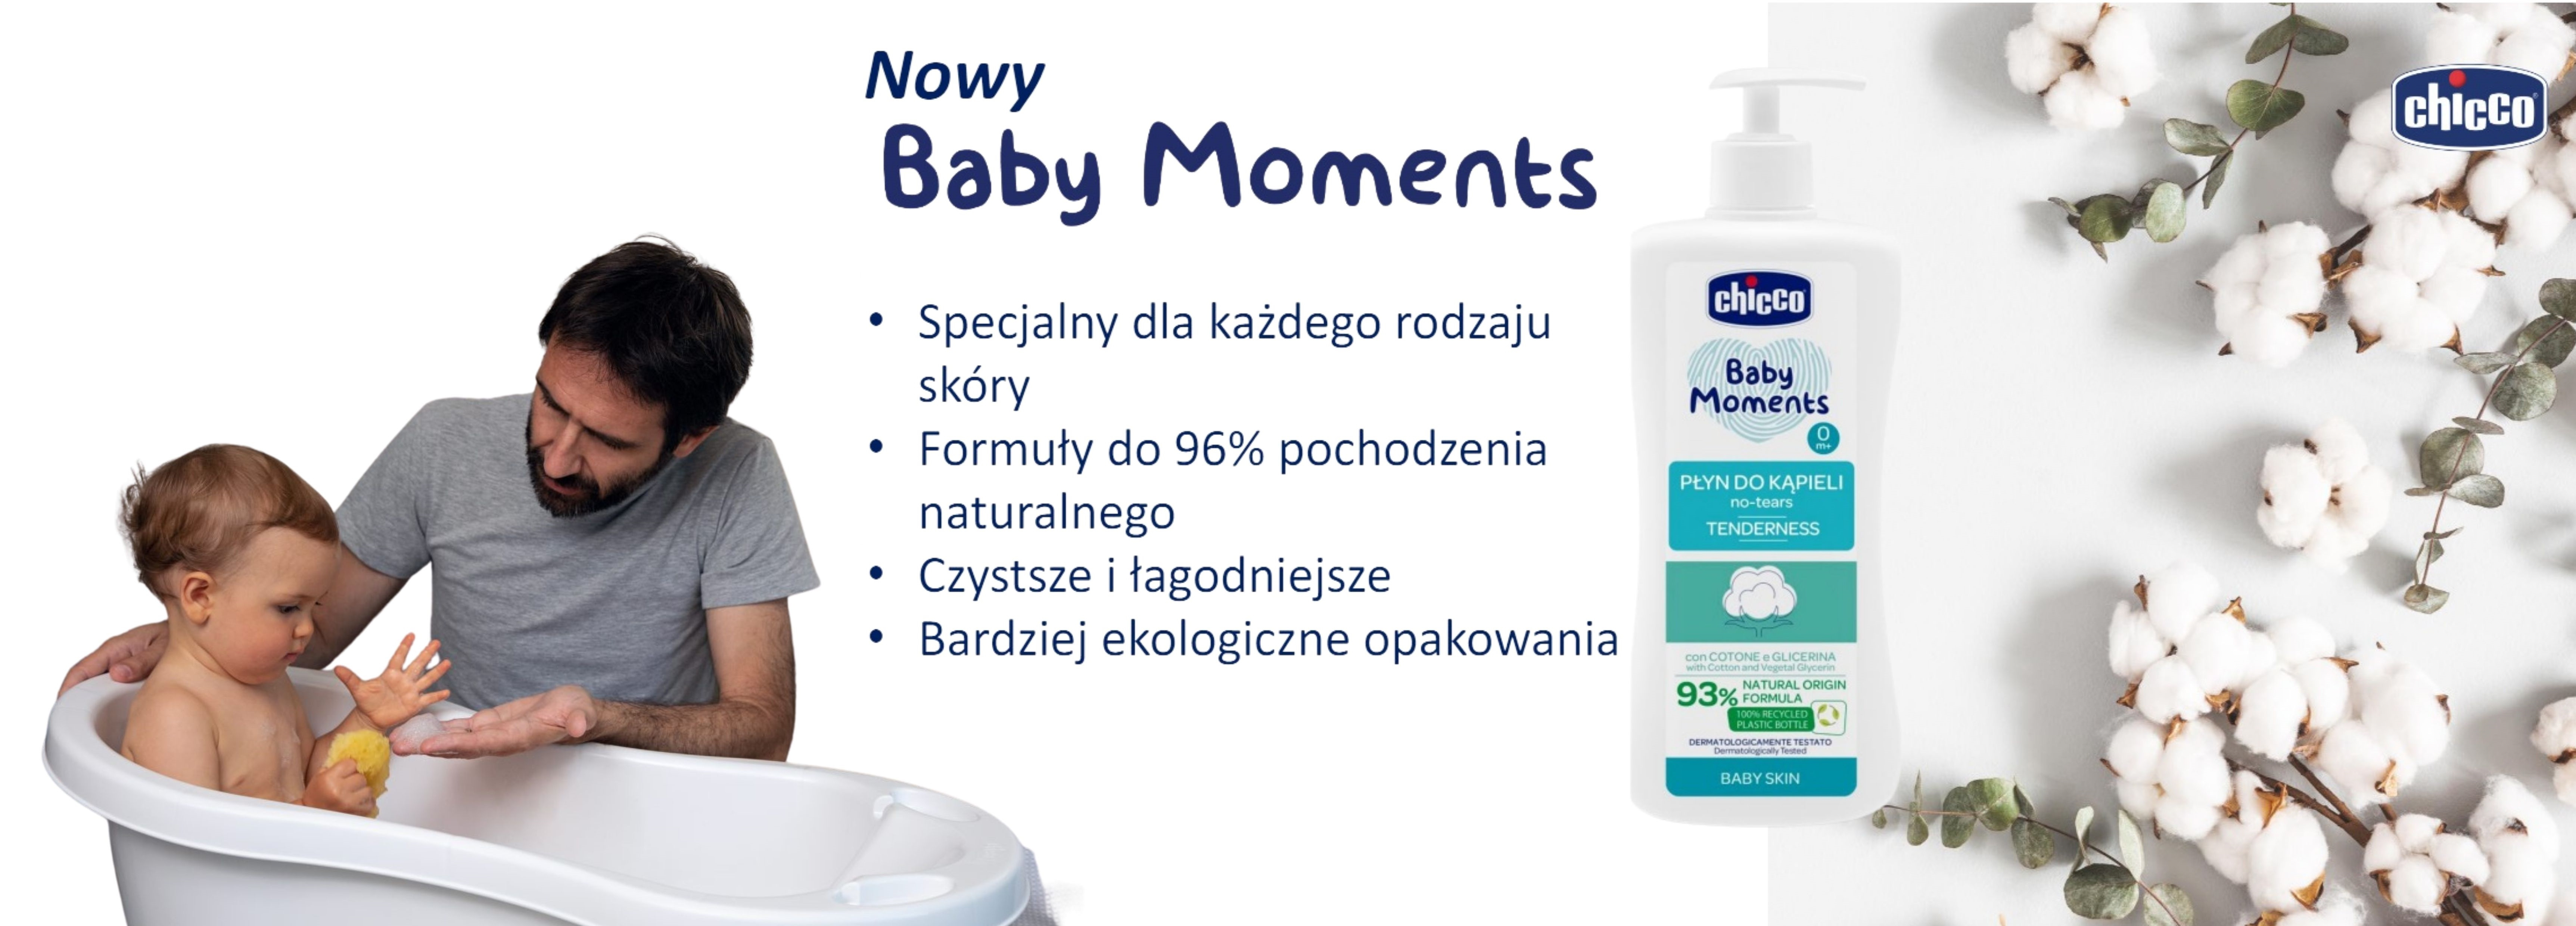 Płyn_baby_moment_chicco